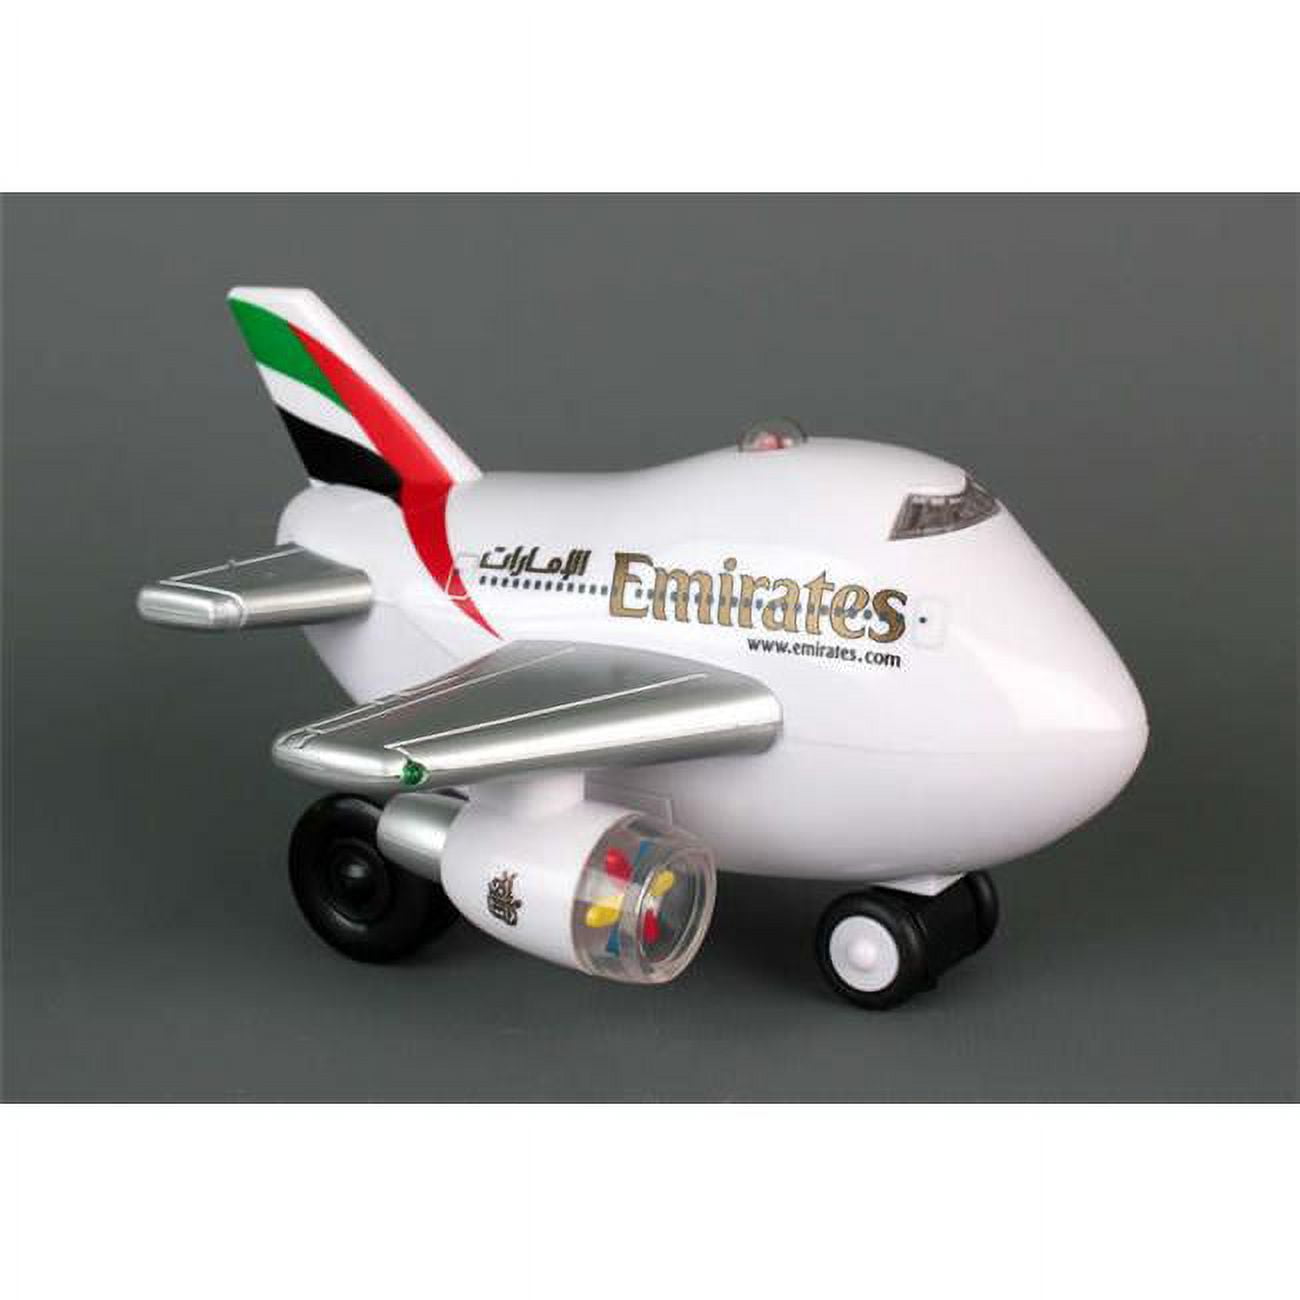 Bg56937 Emirates Bump & Go Airplane